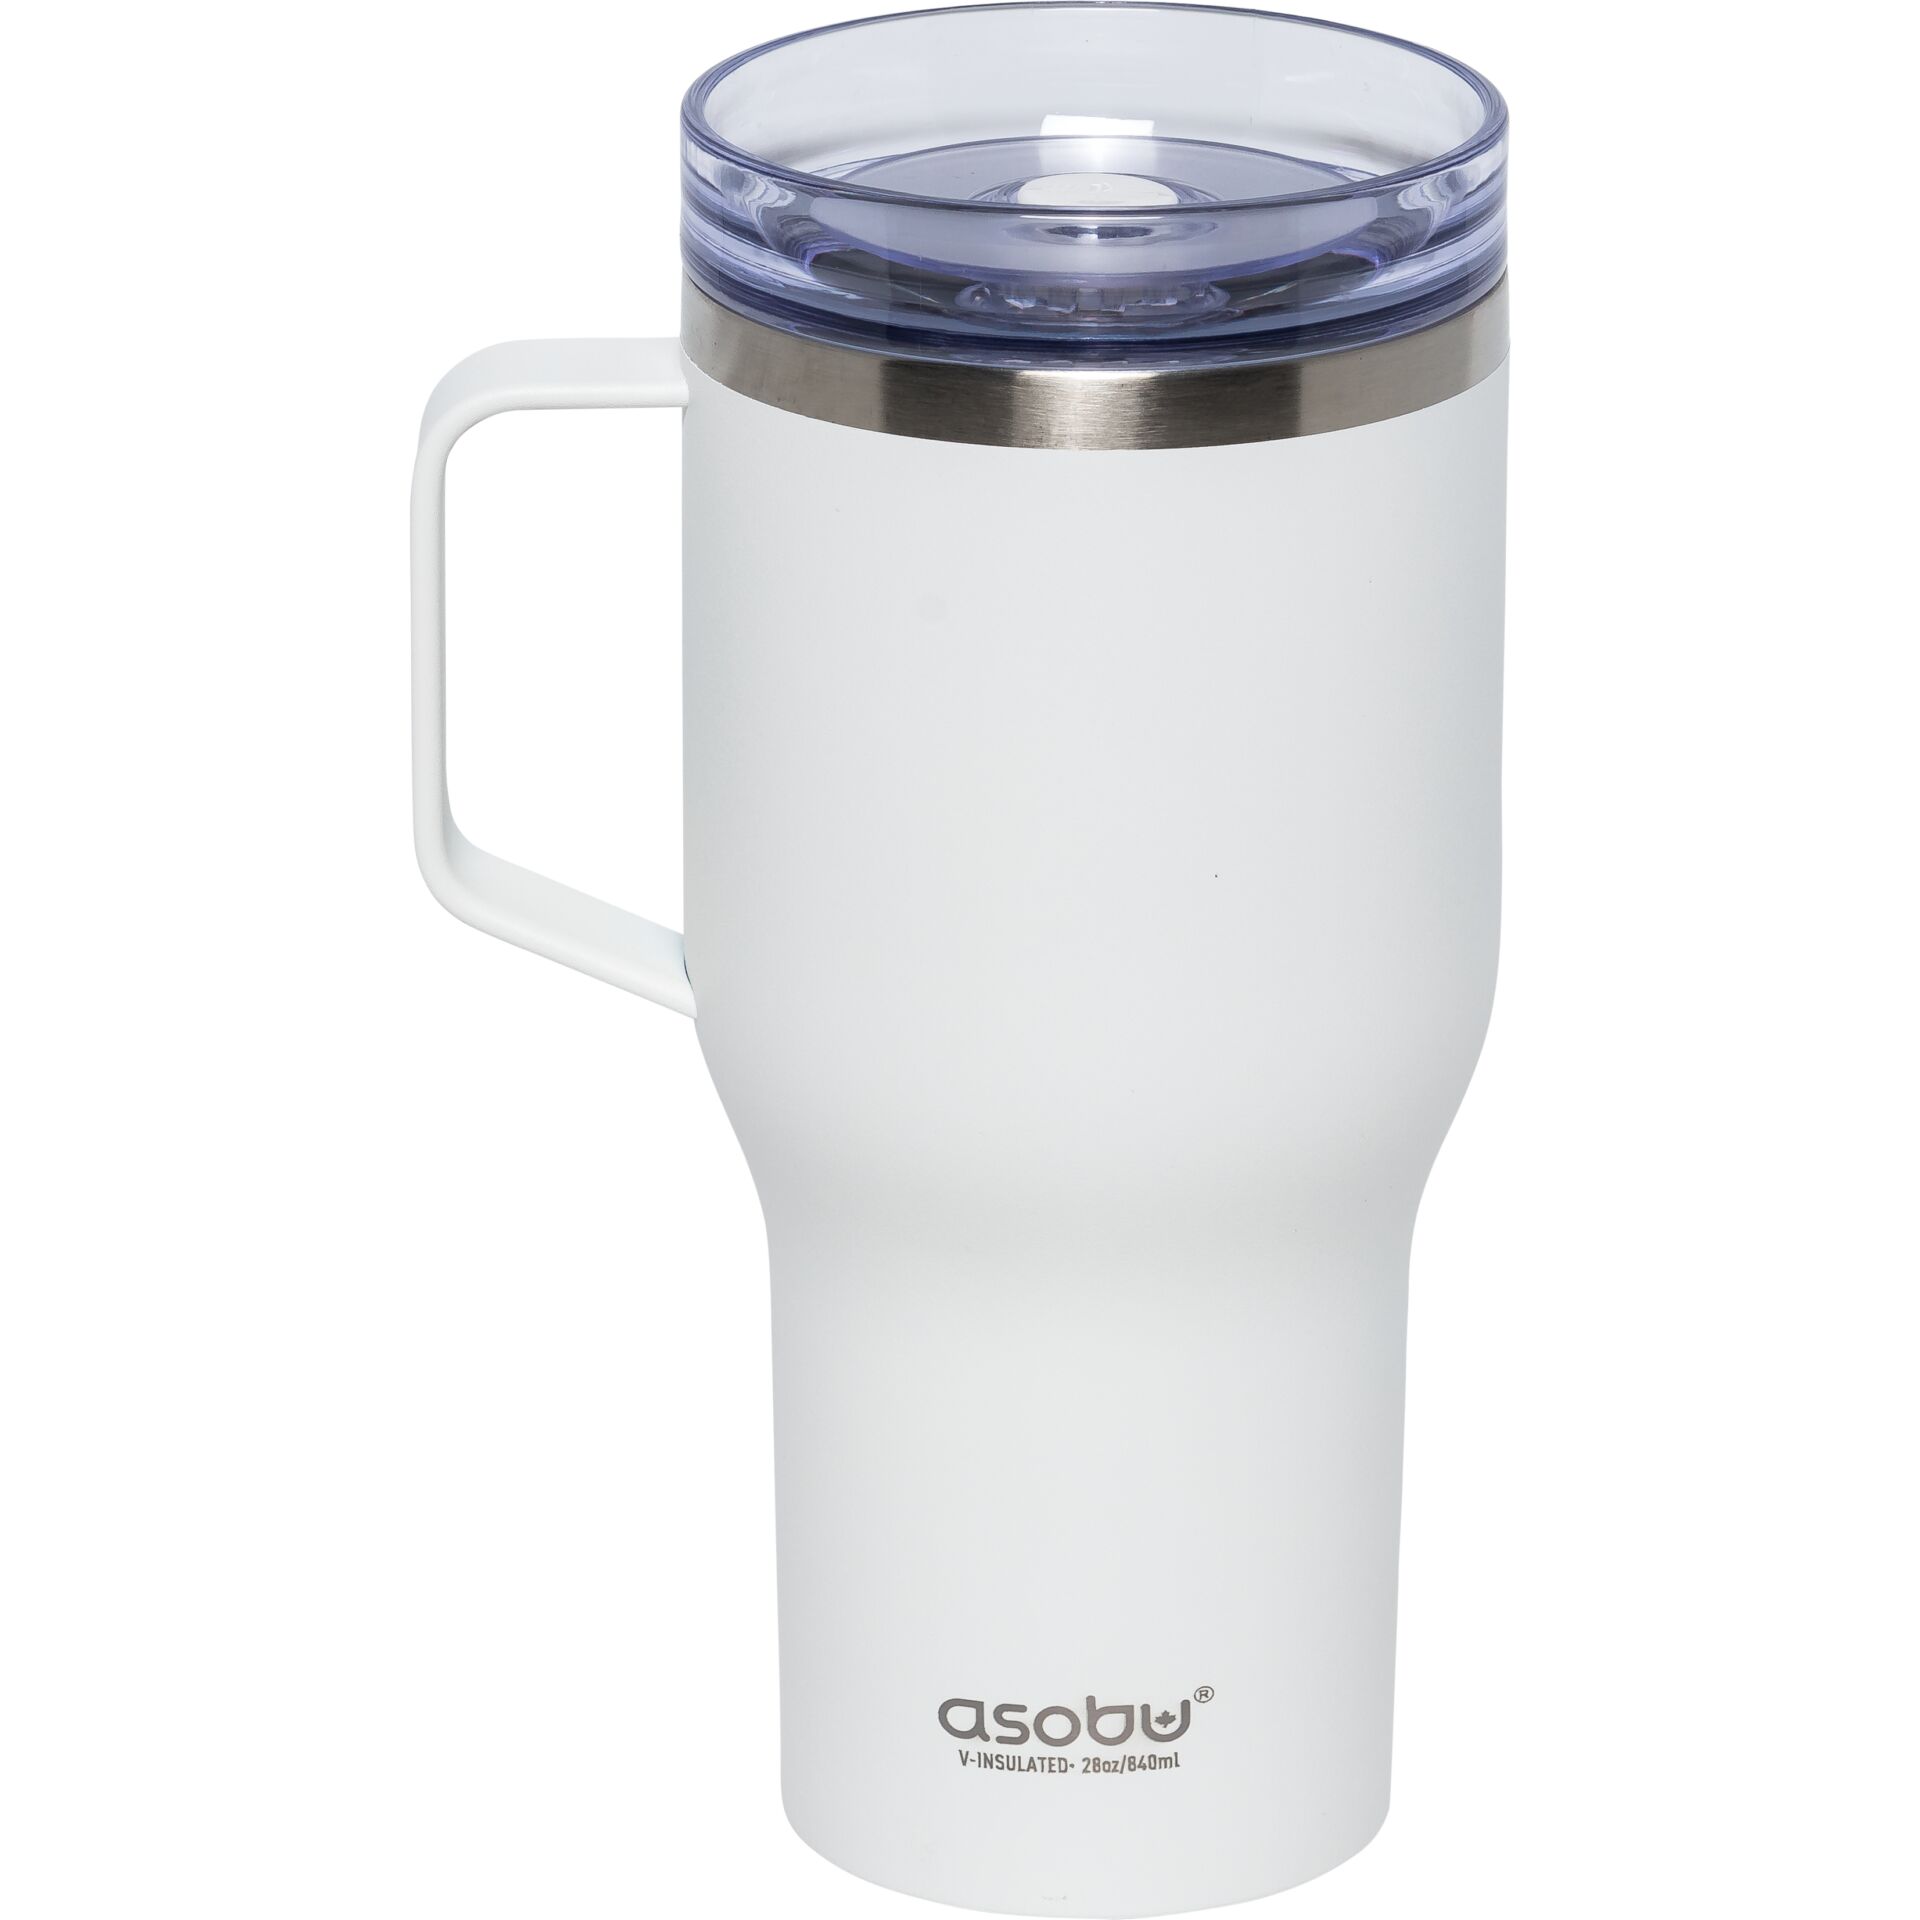 Asobu 360 Travel Mug bianco, 0.9 L